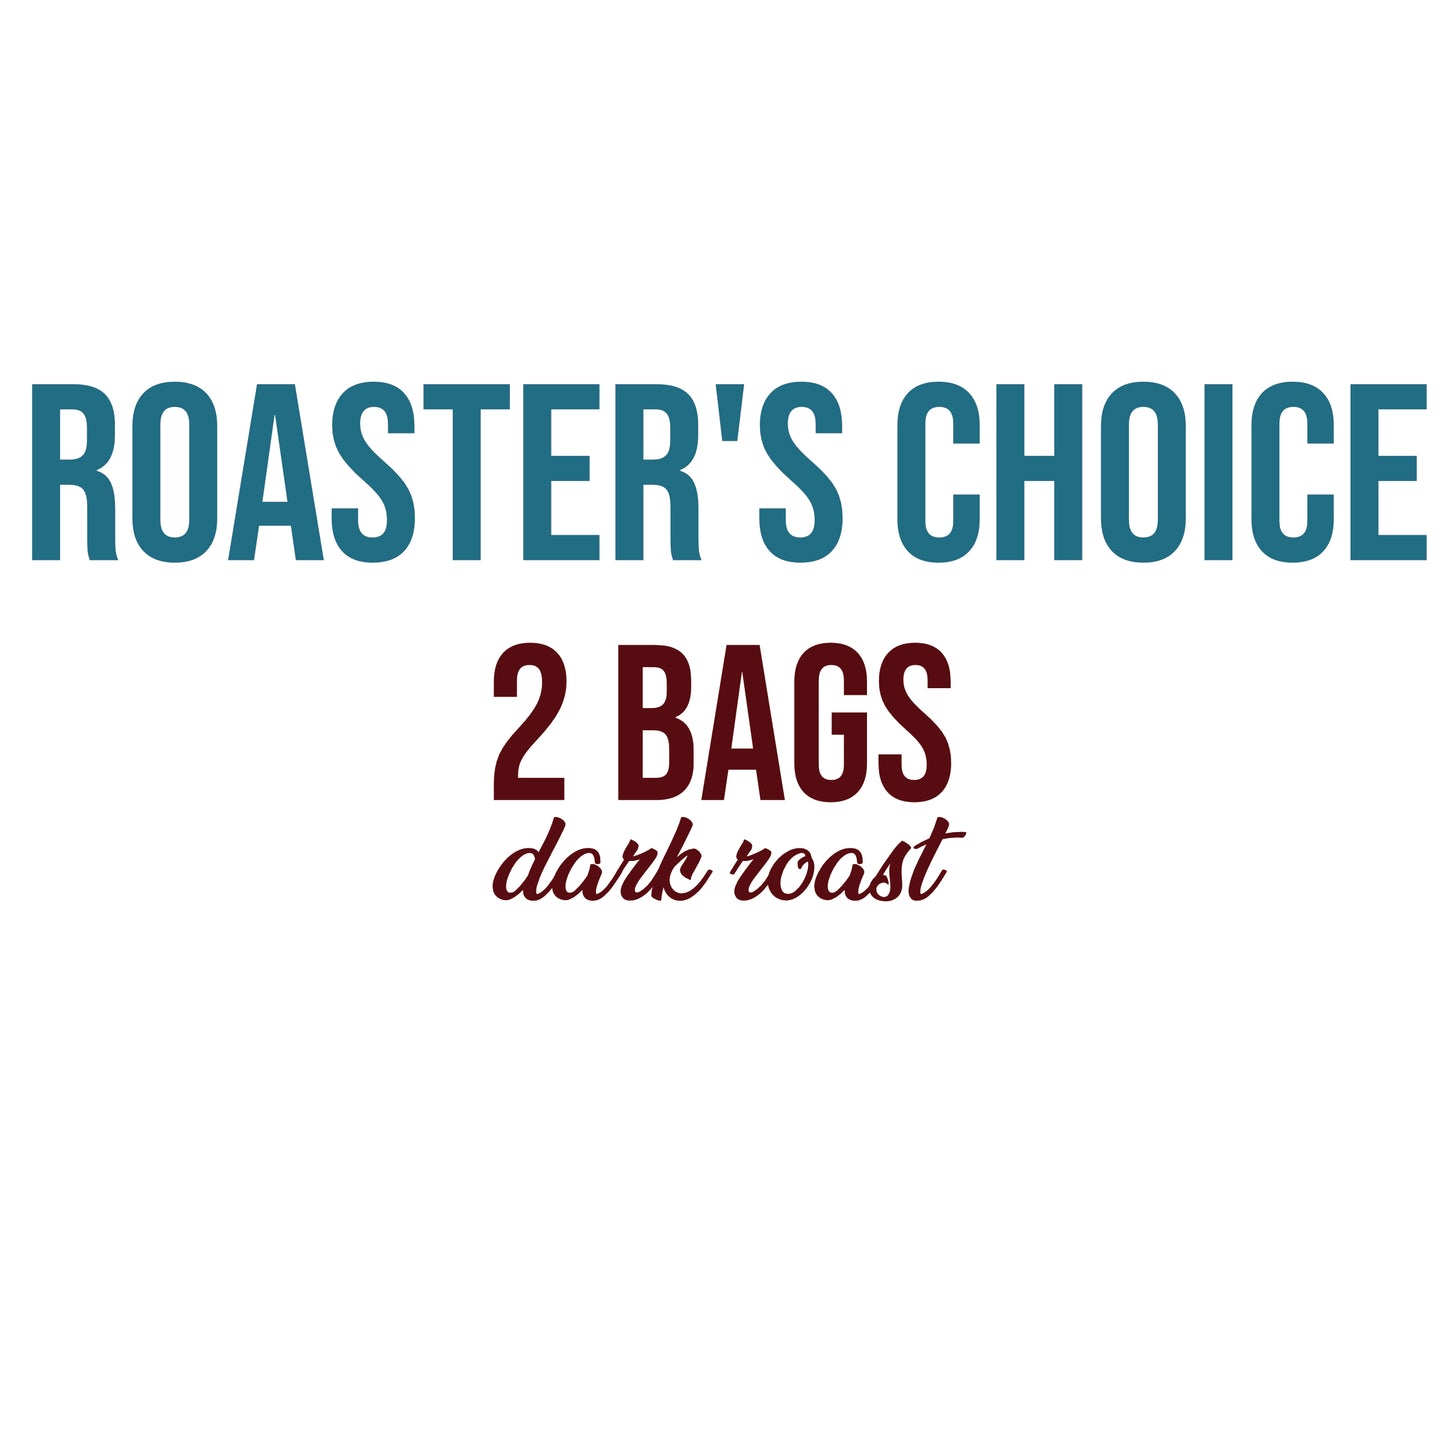 Atlin mountain coffee roasters. coffee subscriptions. roaster's choice 2 bags dark roast